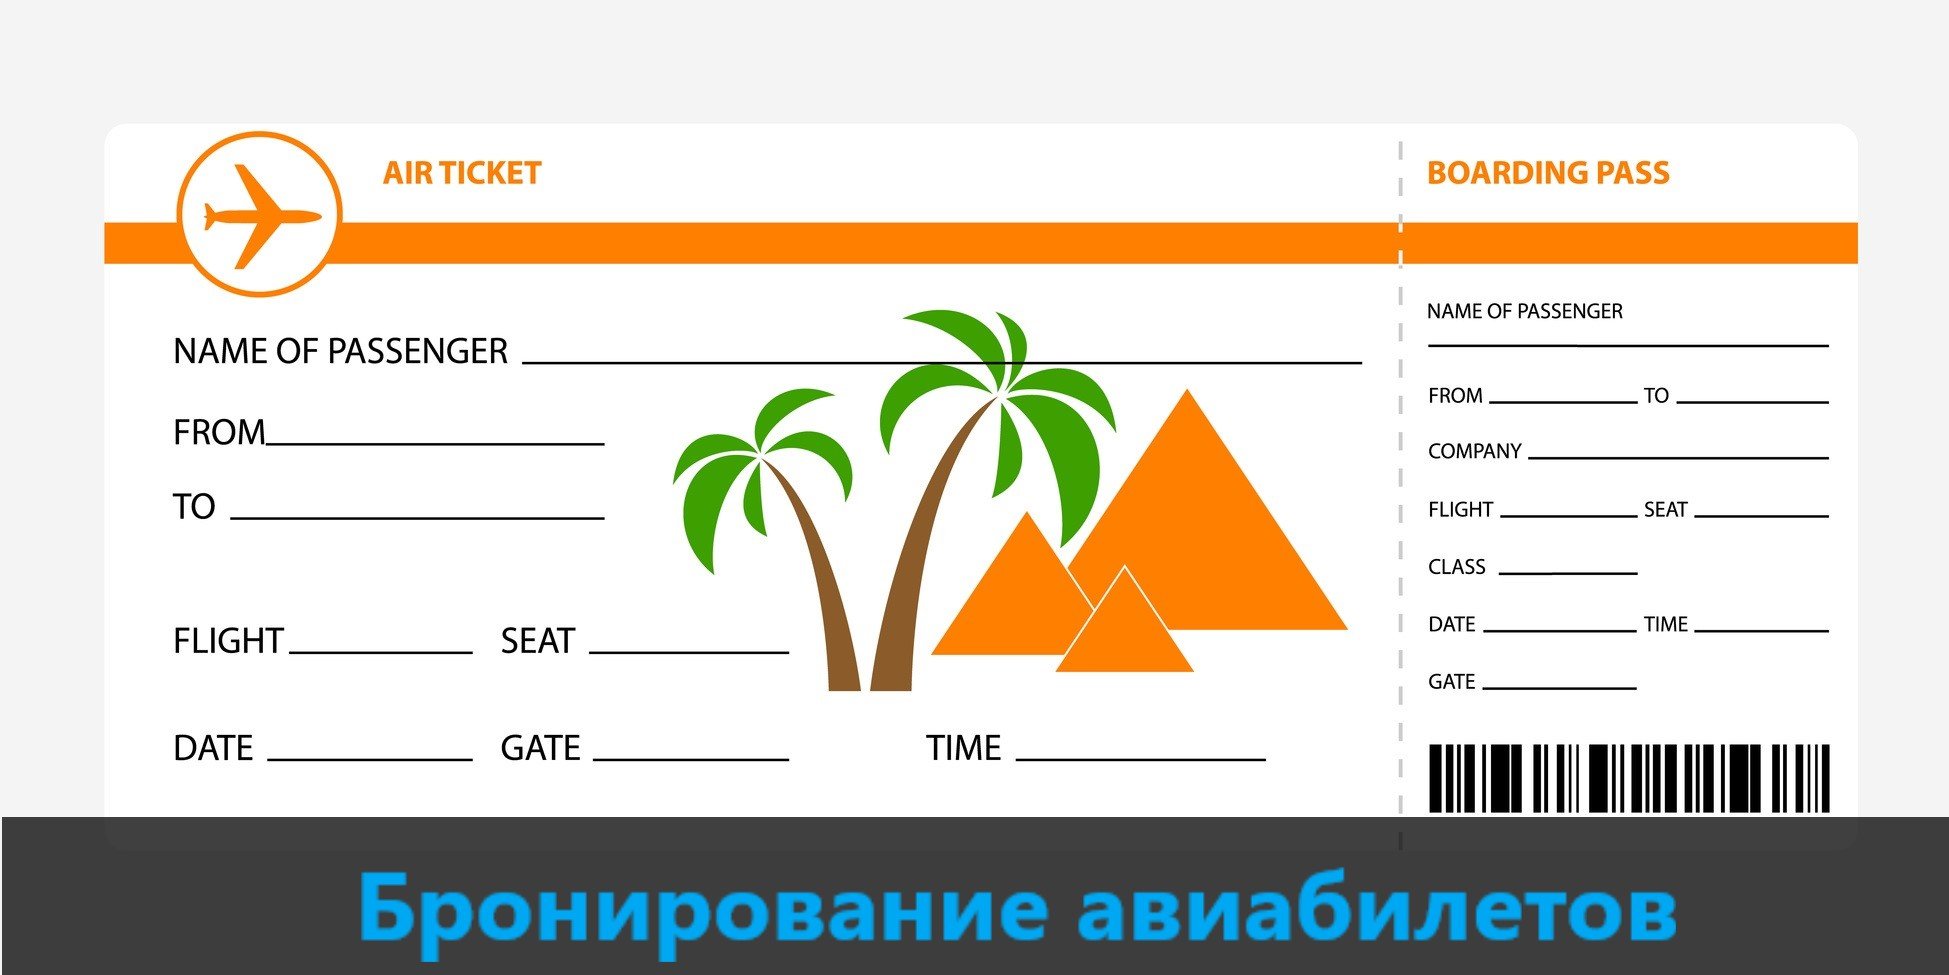 Ребенок 14 лет билет на самолет. Шуточный билет на самолет. Макет билета на самолет. Распечатка билетов на самолет. Распечатать билет на самолет.